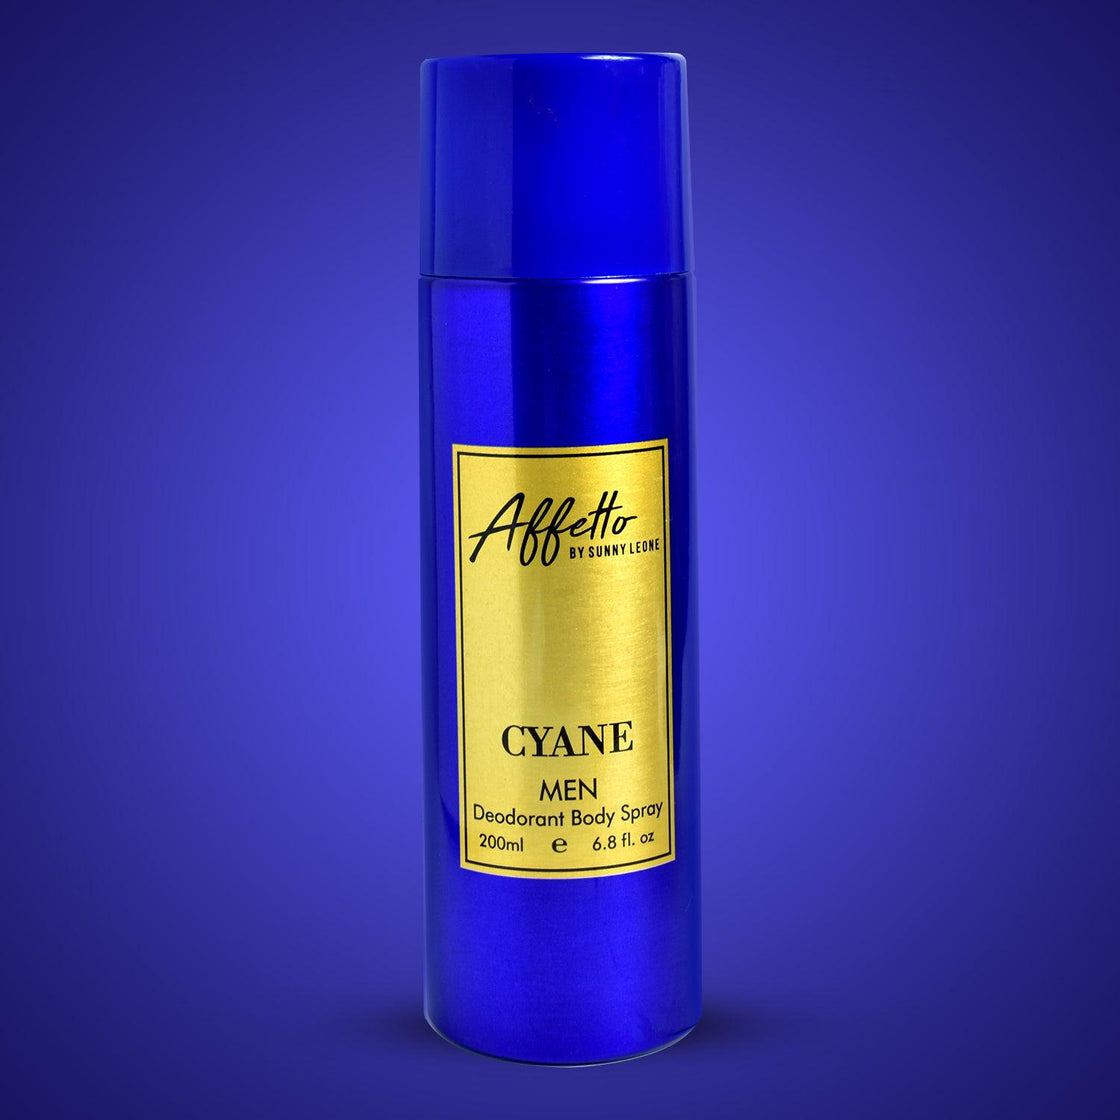 CYANE- FOR HIM AFFETTO BY SUNNY LEONE -200ML-Deodorant-cruelty free cosmetics-Sunny Leone